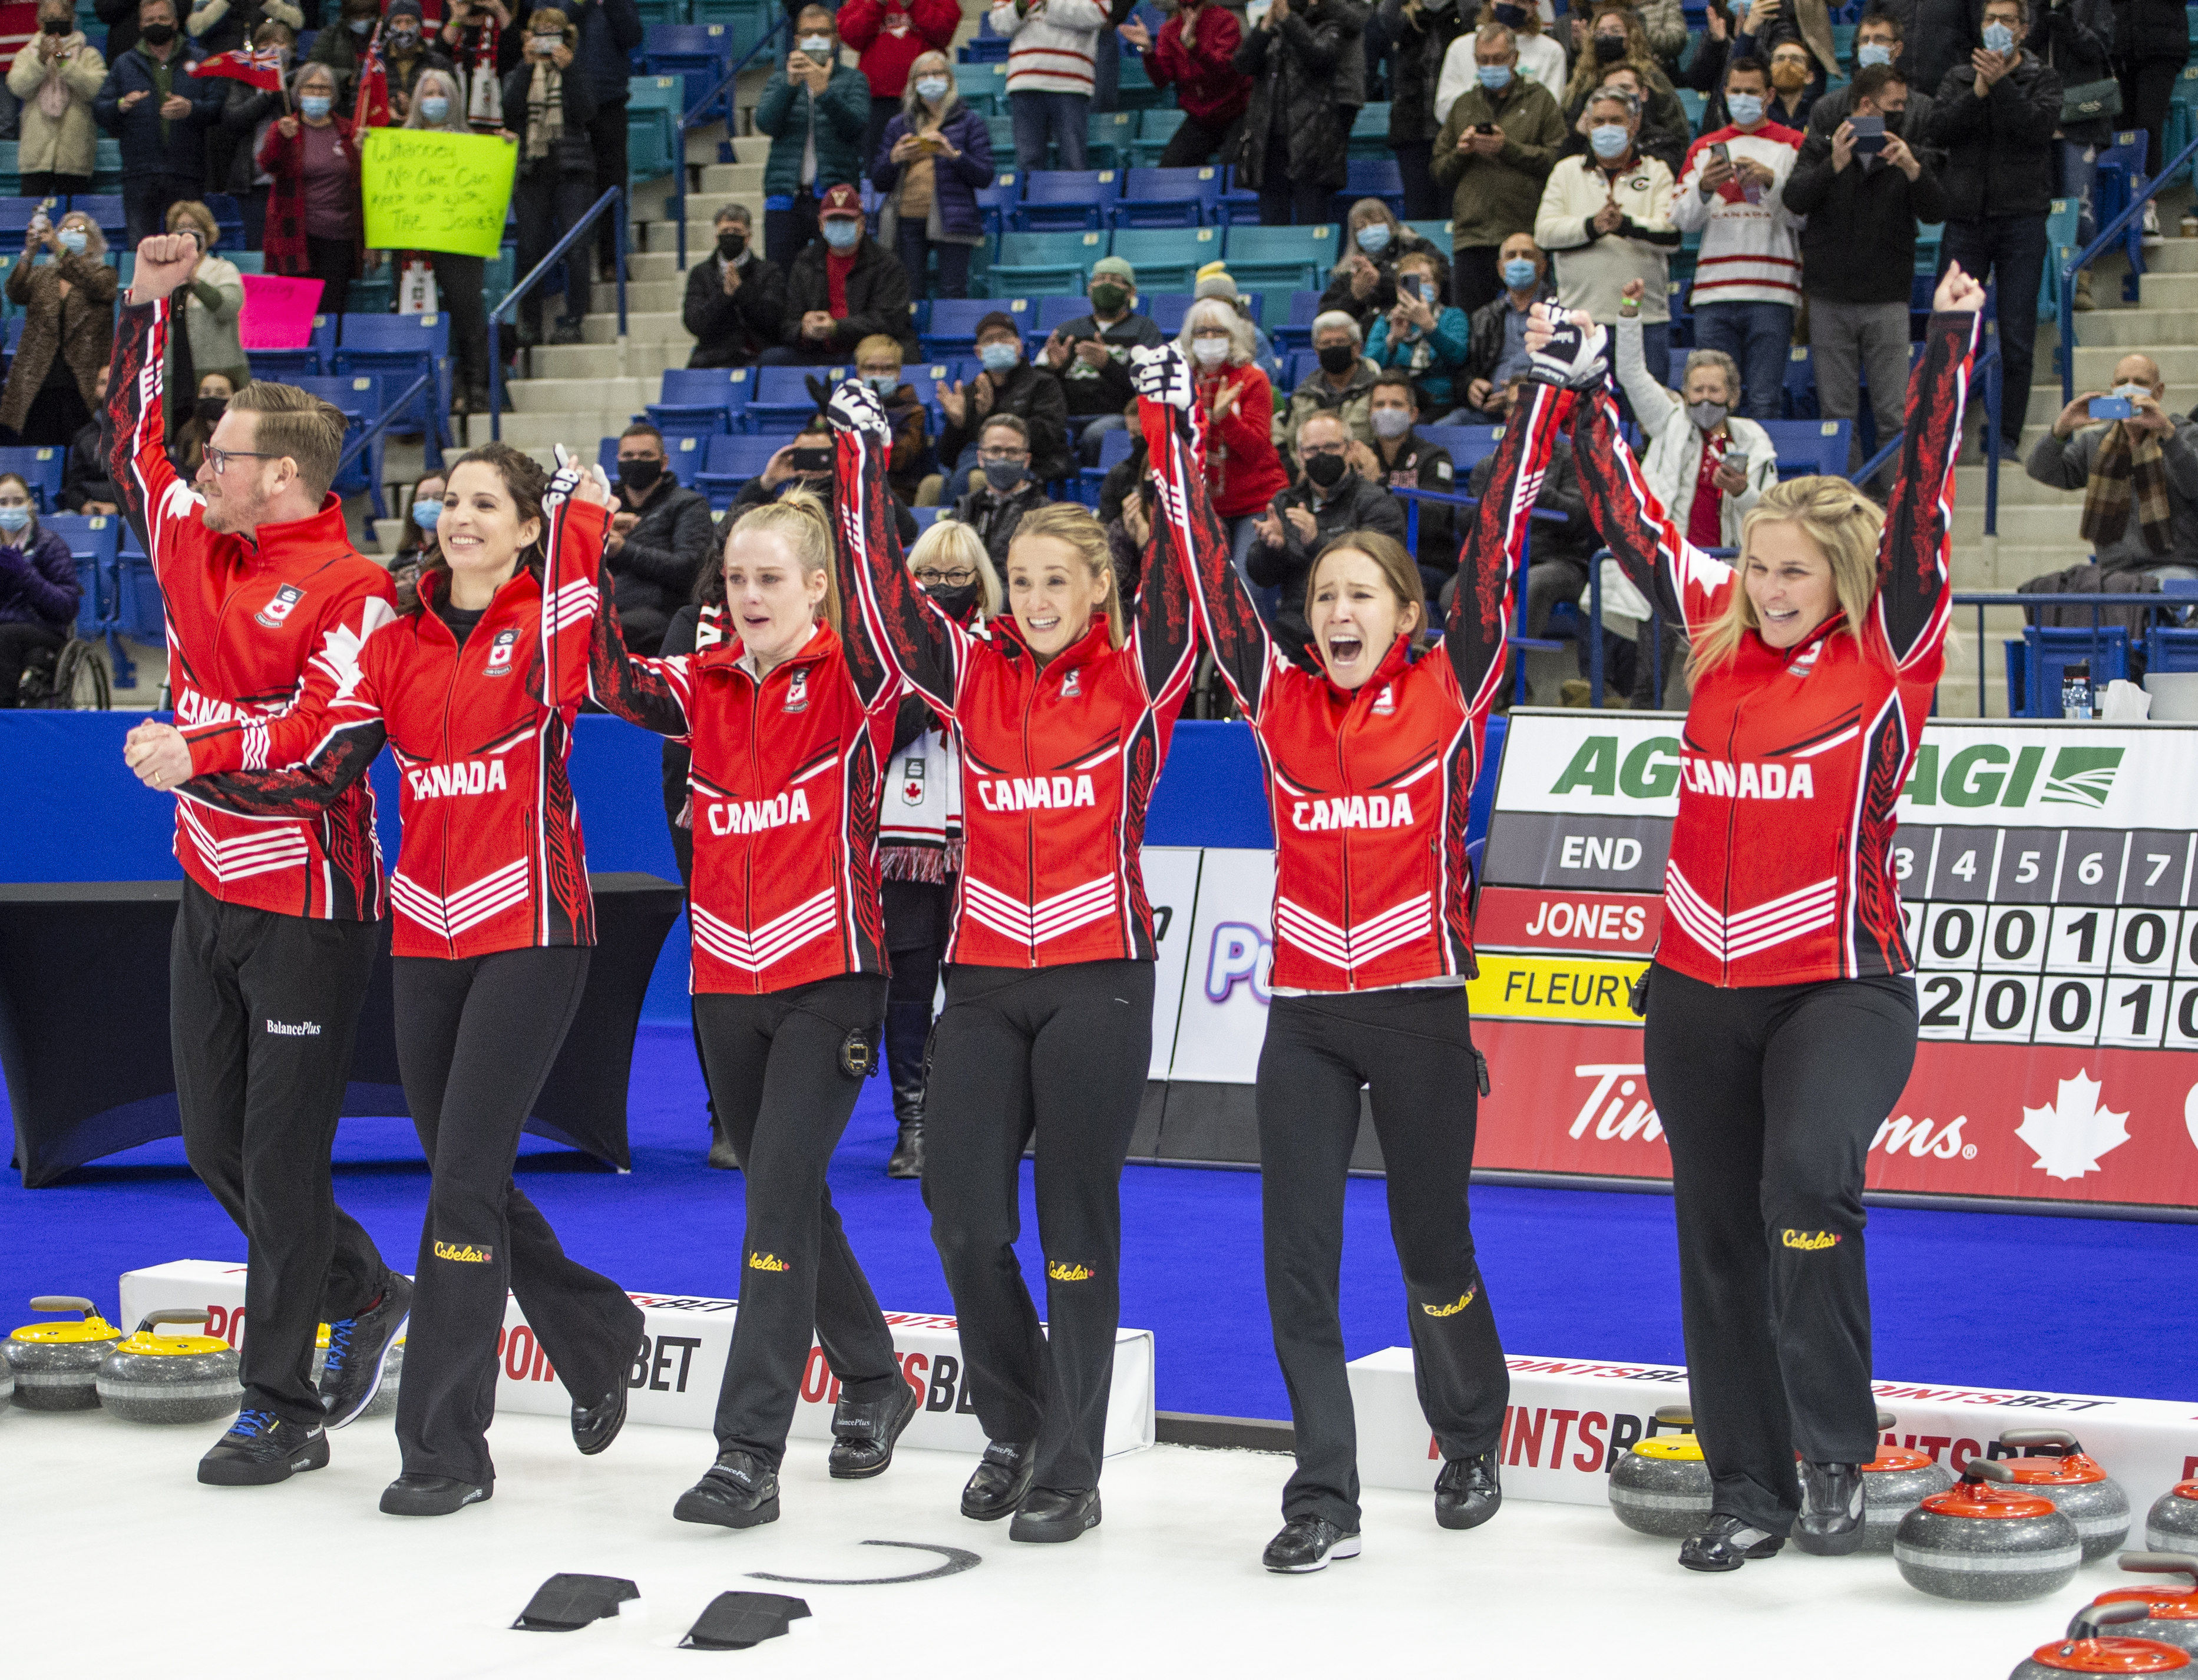 Team Jones to represent Canada in Womens curling at Beijing winter games